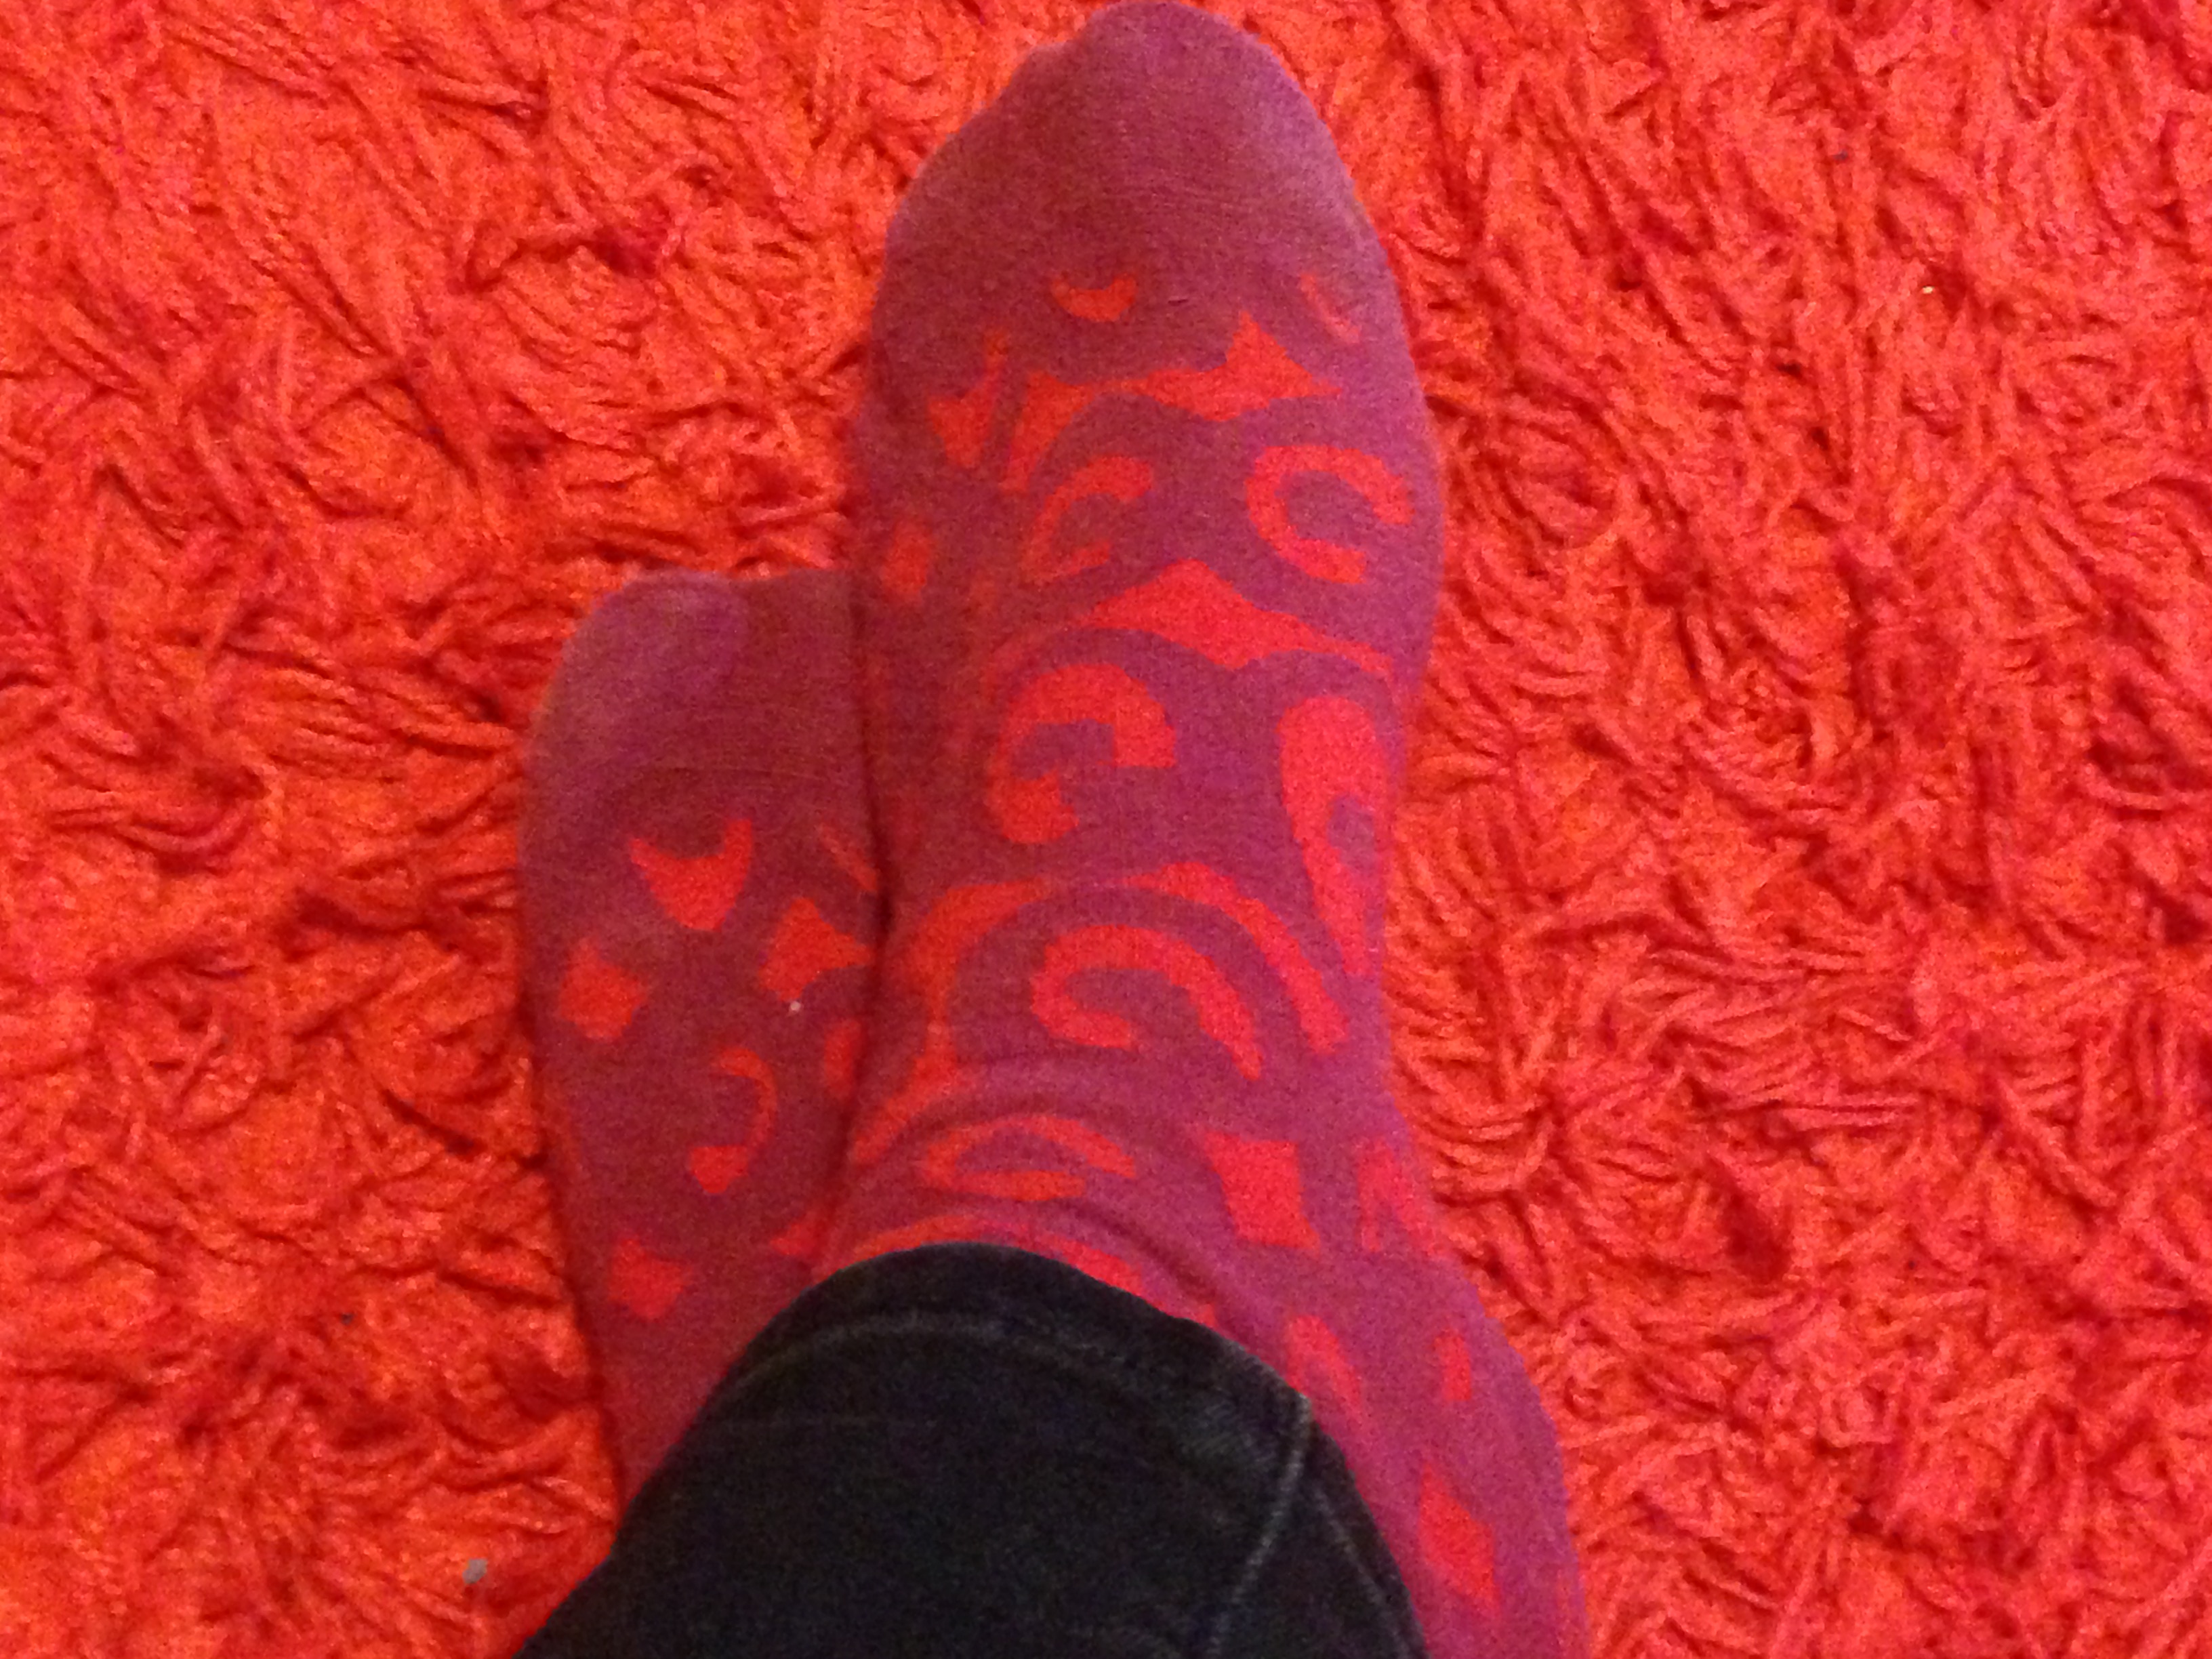 bright red and purple marimekko socks on a bright red shag rug